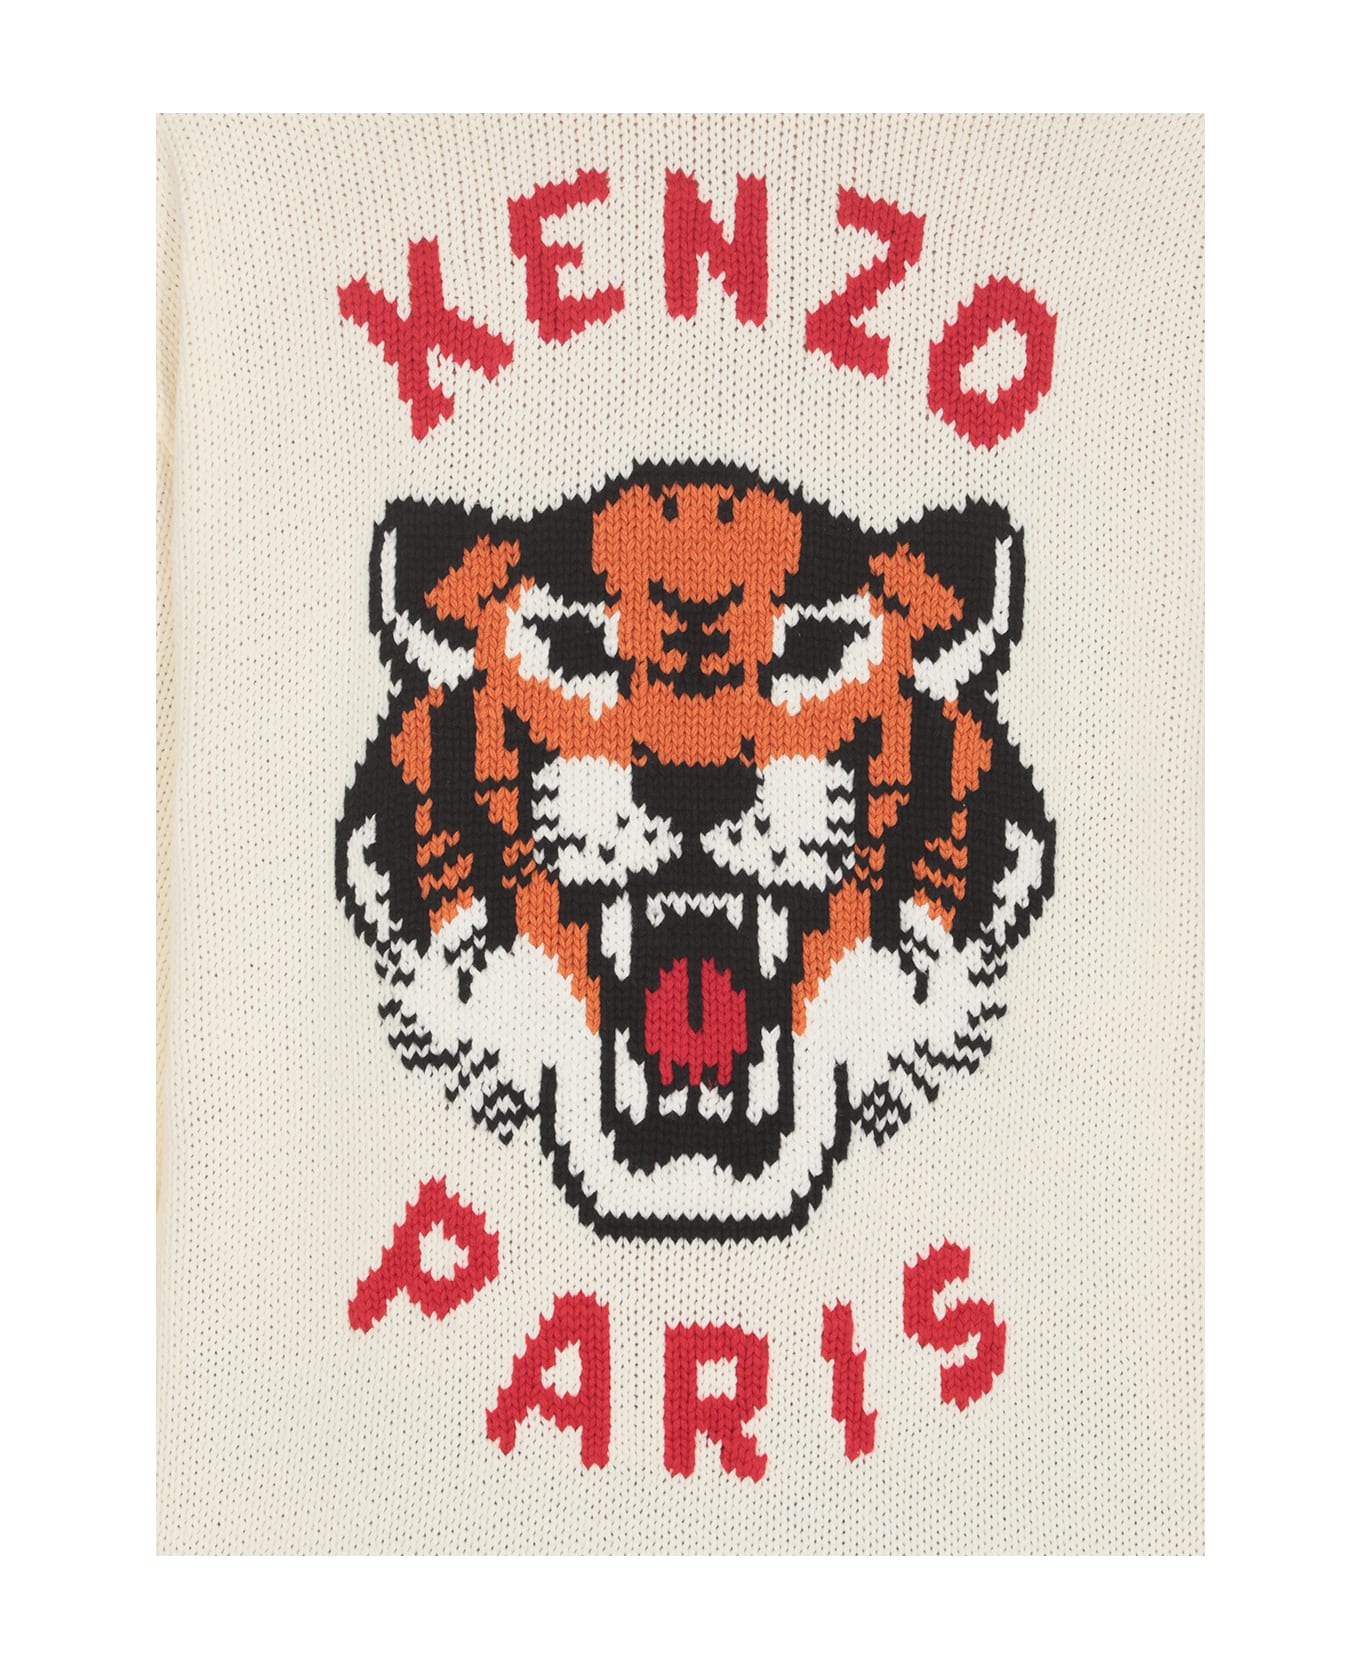 Kenzo 'lucky Tiger' Sweater - Ivory ニットウェア